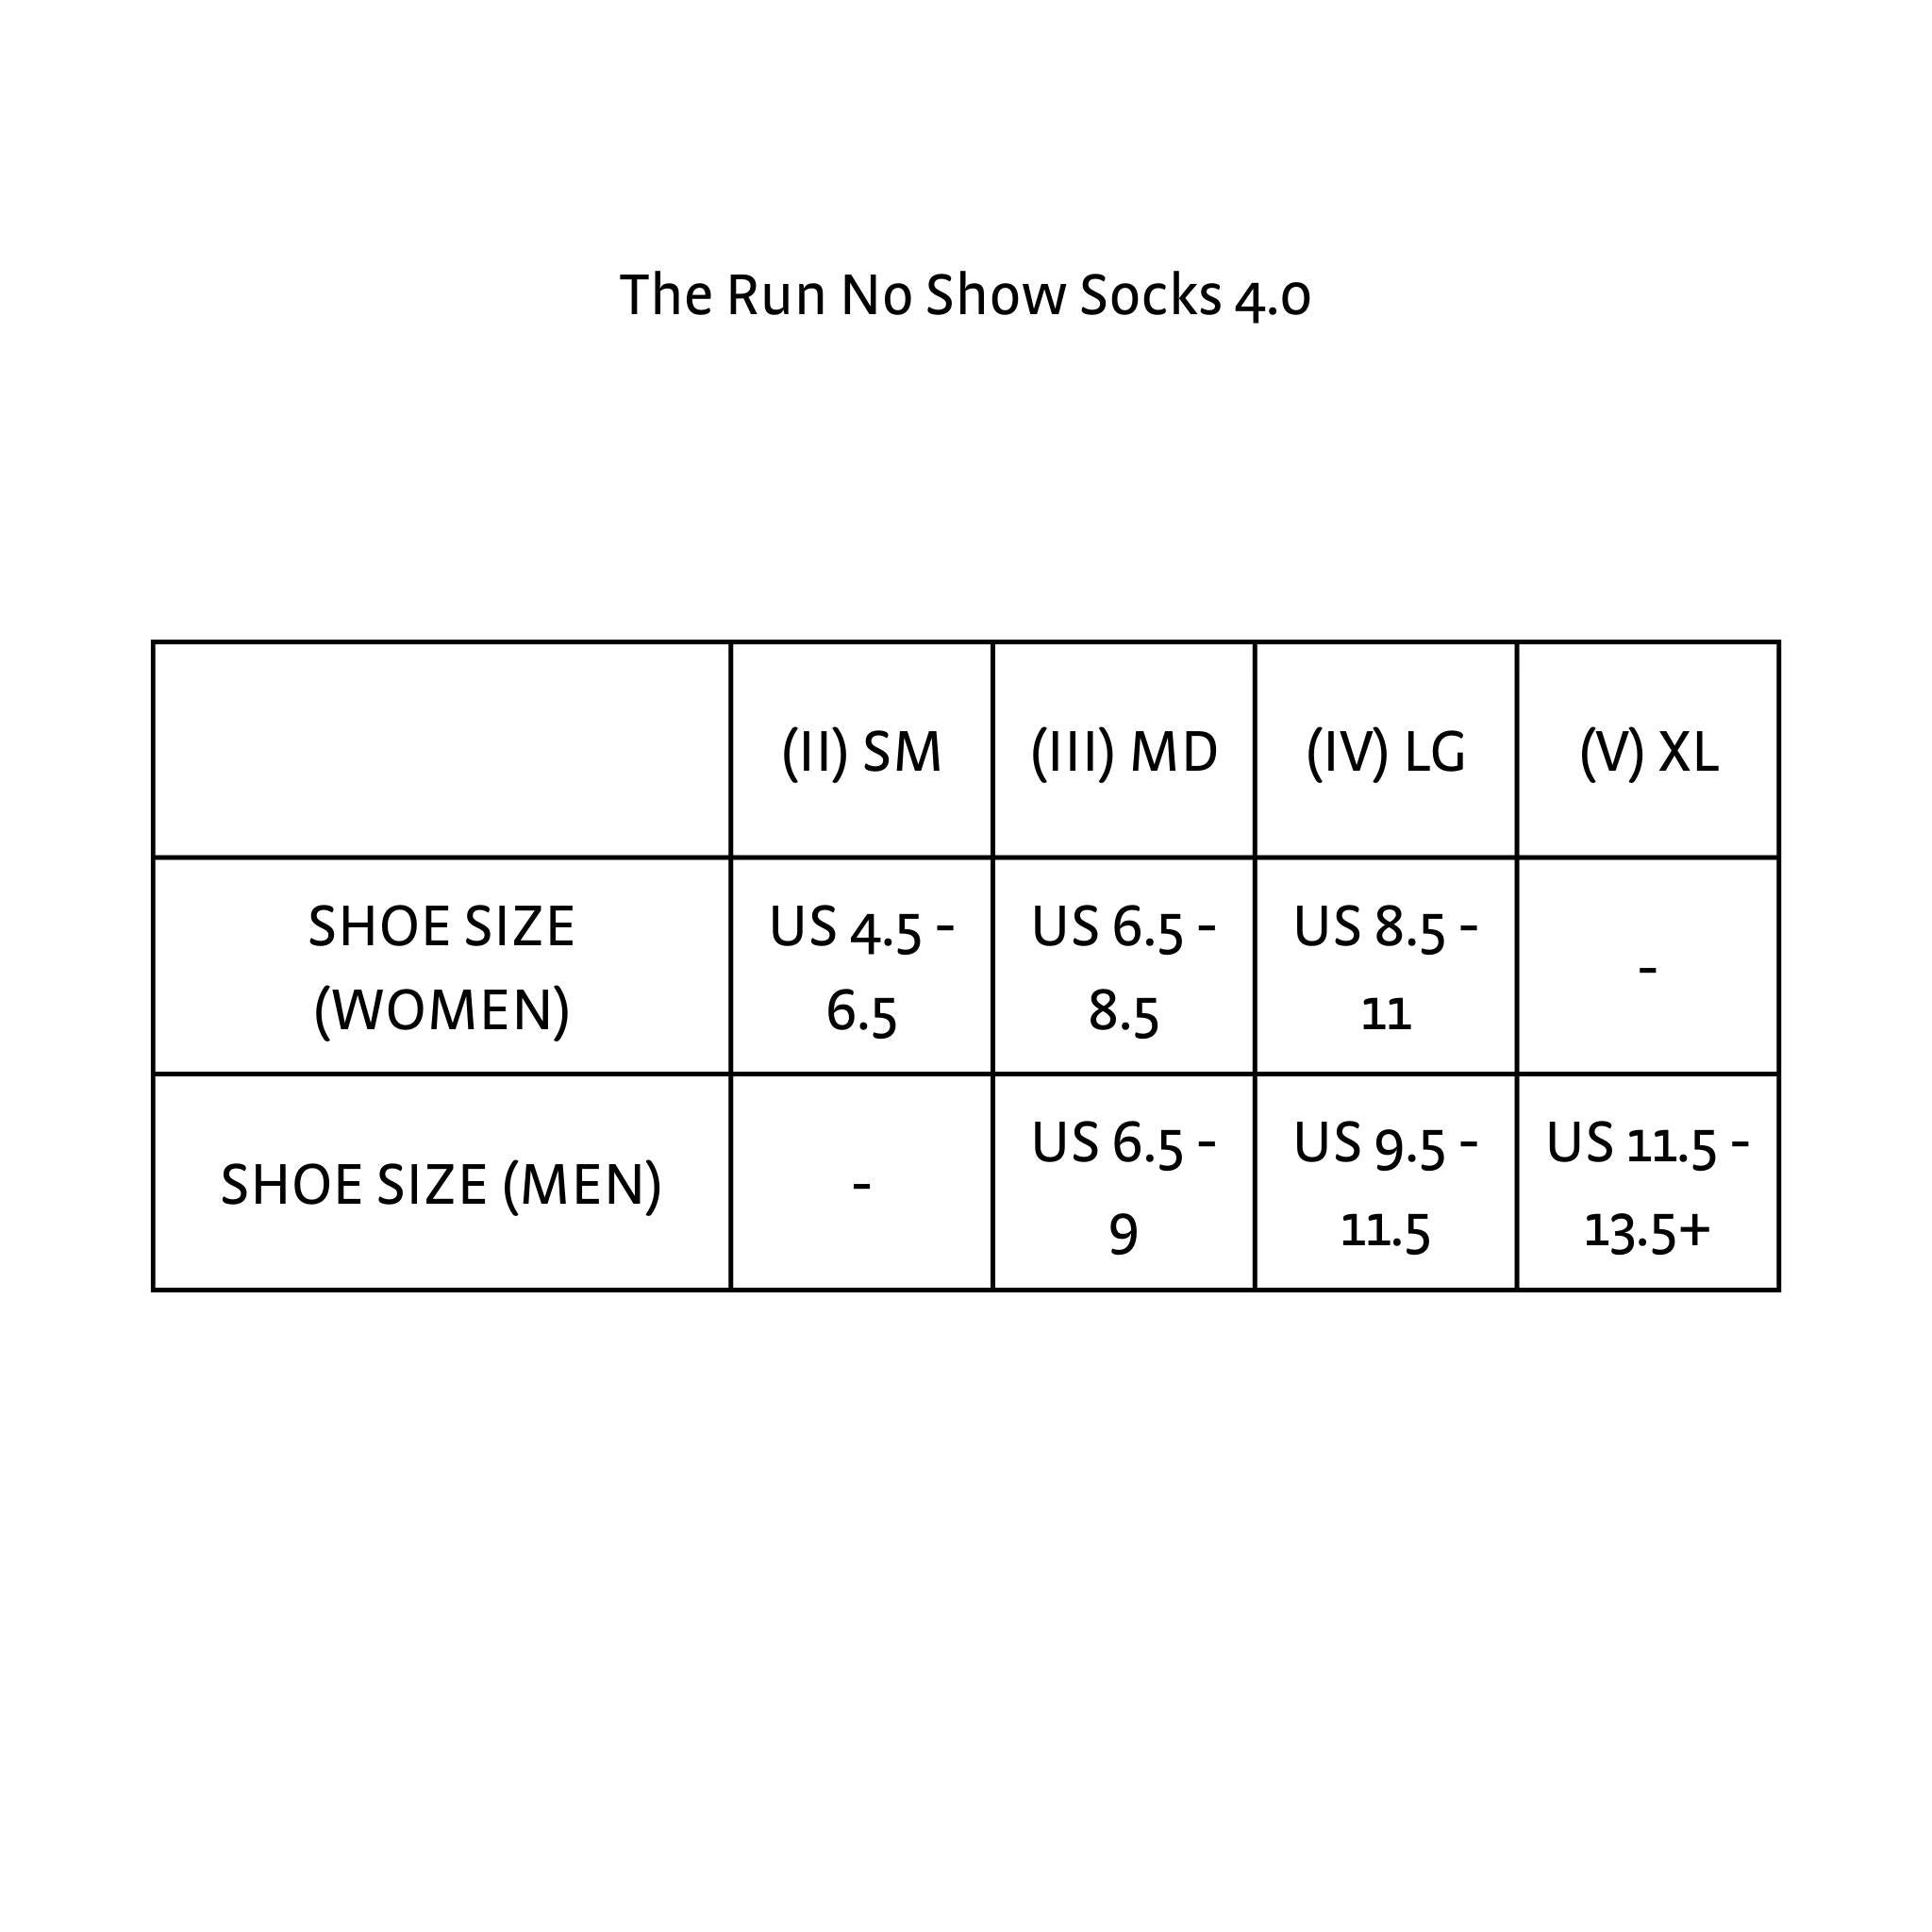 The Run No Show Socks 4.0 